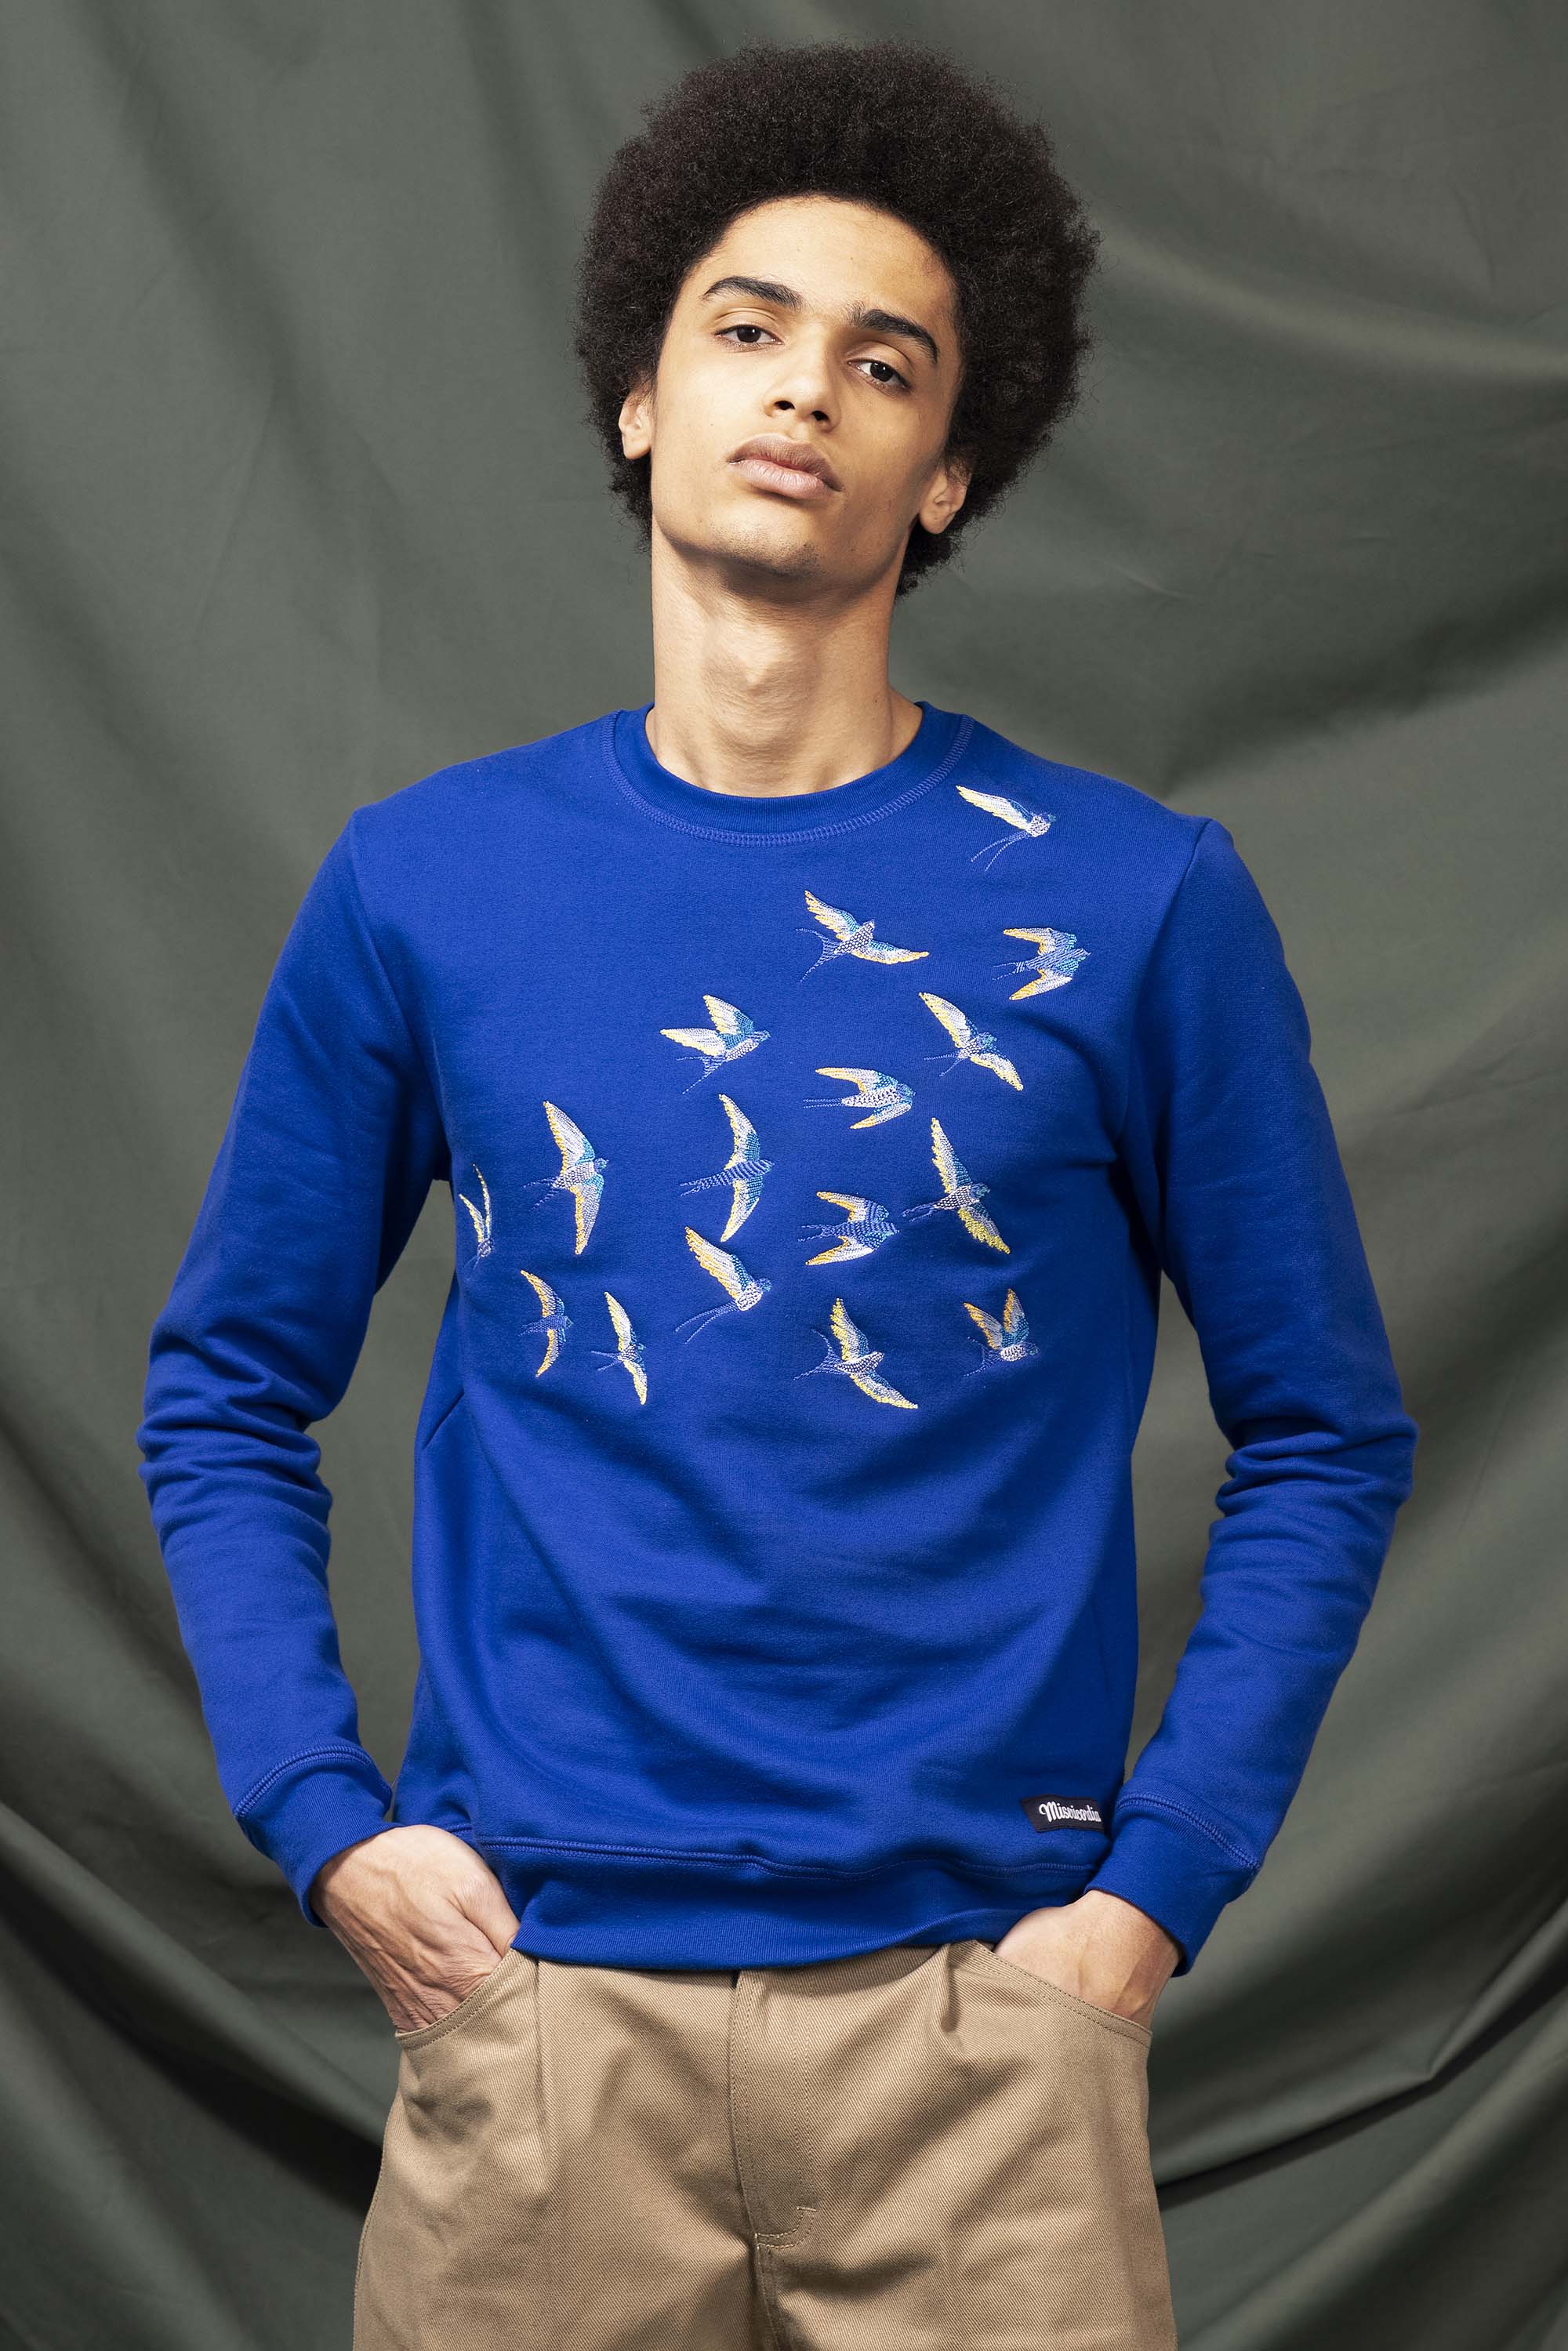 Macarron sapphire blue cotton sweatshirt with bird embroidery